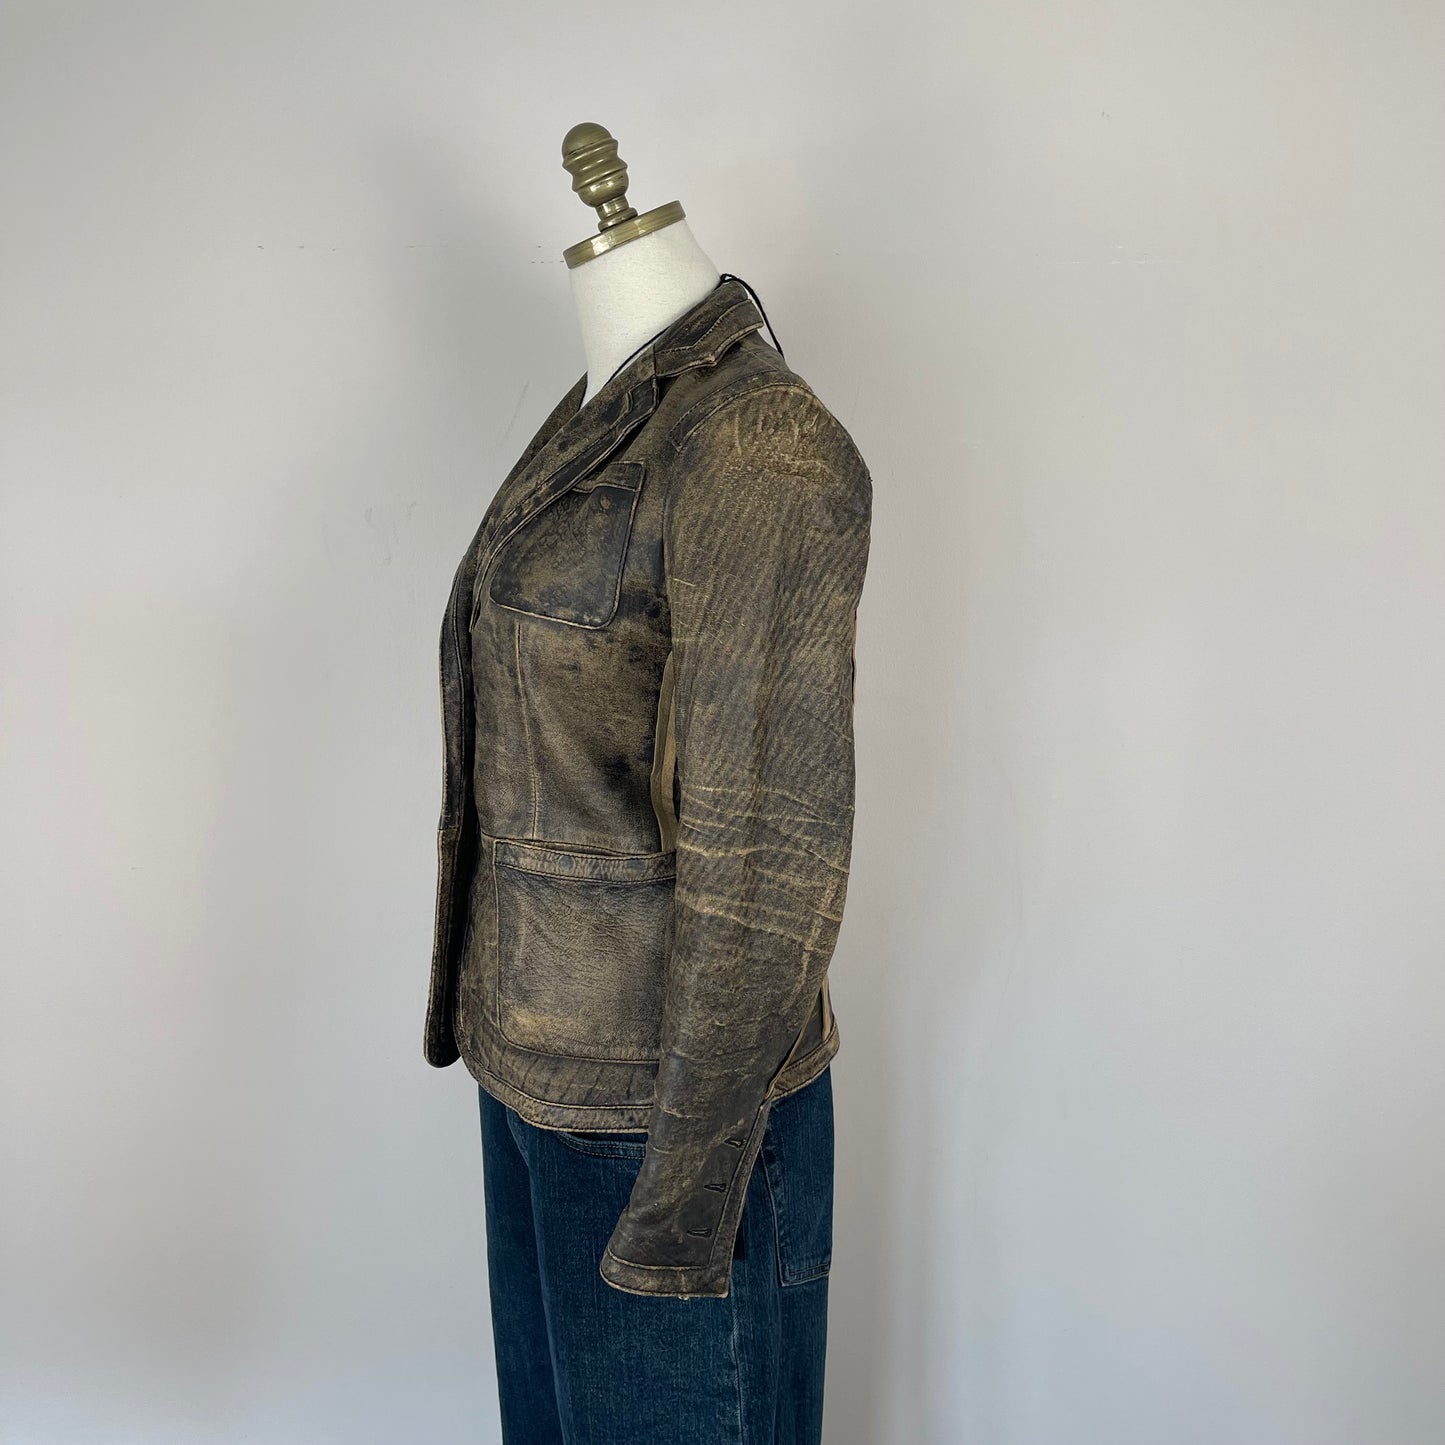 Vintage DKNY Distressed Leather Jacket